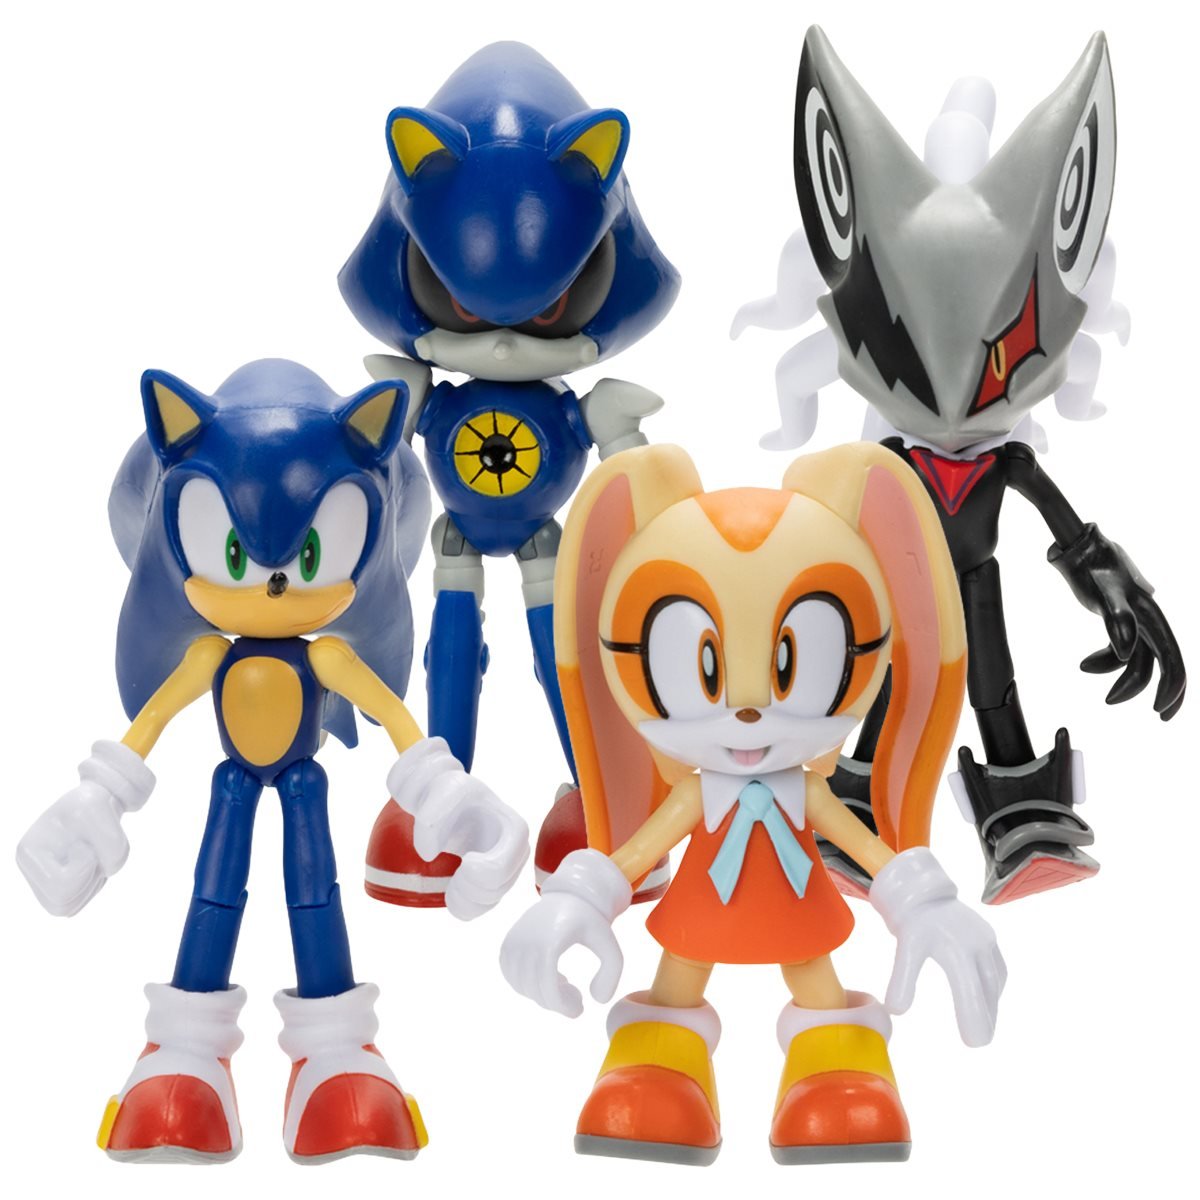 Jakks Pacific Sonic the Hedgehog Articulated Figures Series 1 Sonic Figure